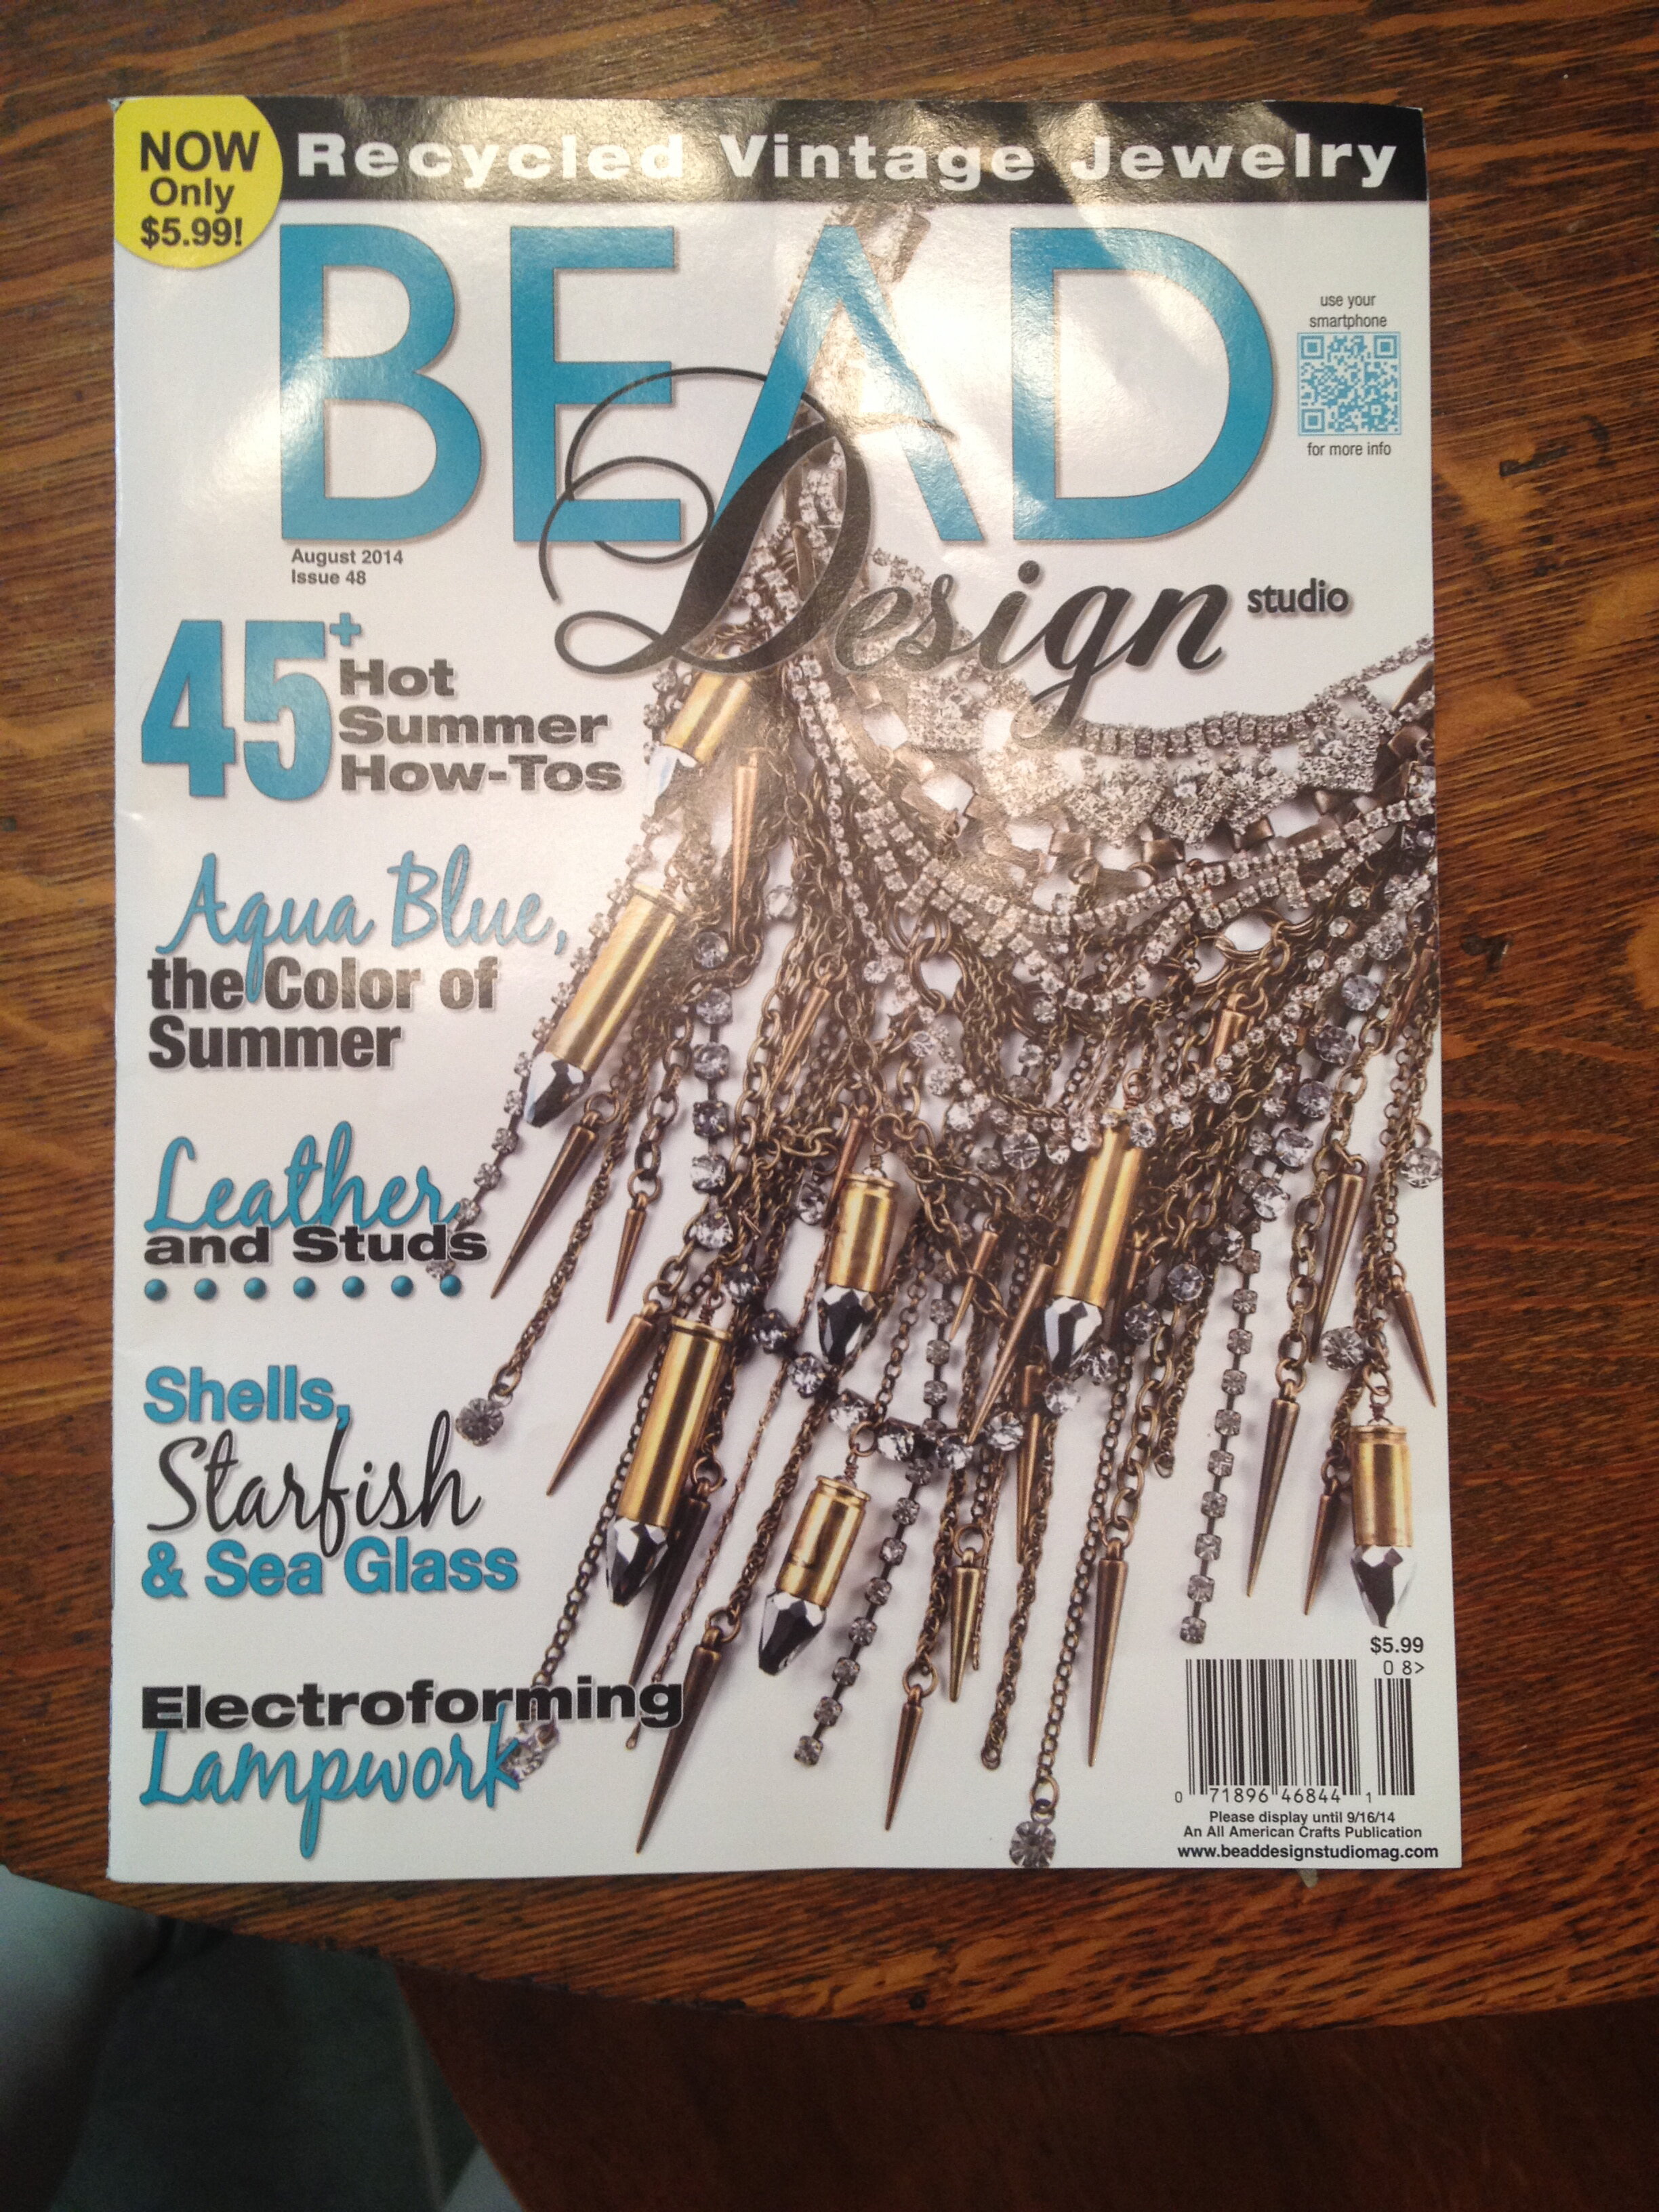  August 2014: Bead Design Studio magazine, Page 88, “Bead Stuff We Love” 